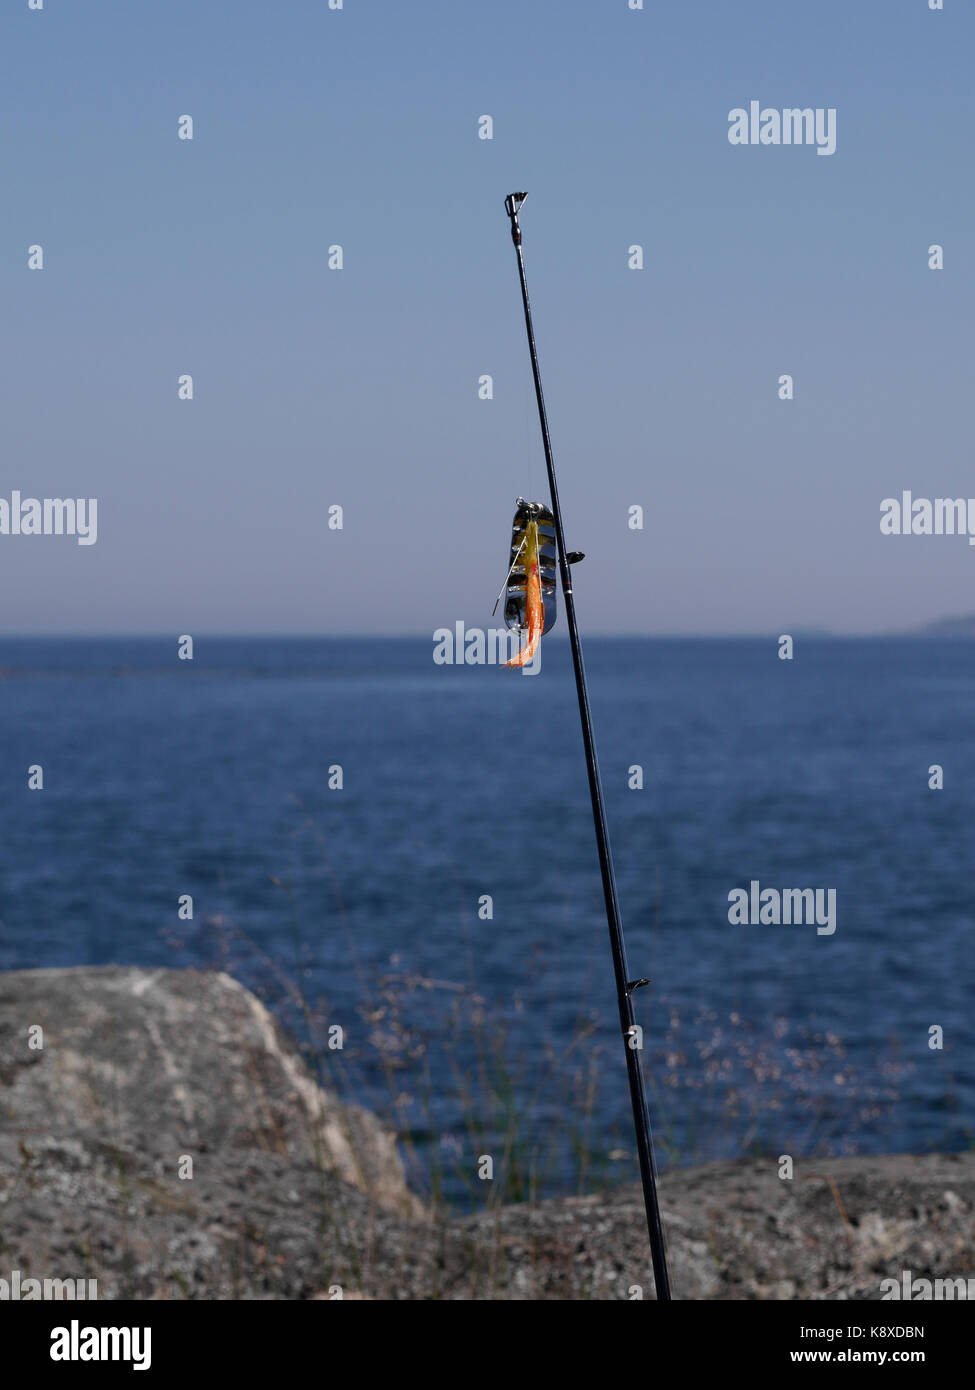 Fishing rod with lure, outside of Räfsnäs, Close to Gräddö, Rådmansö in the Roslagen archipelago North of Stockholm, Sweden. Stock Photo